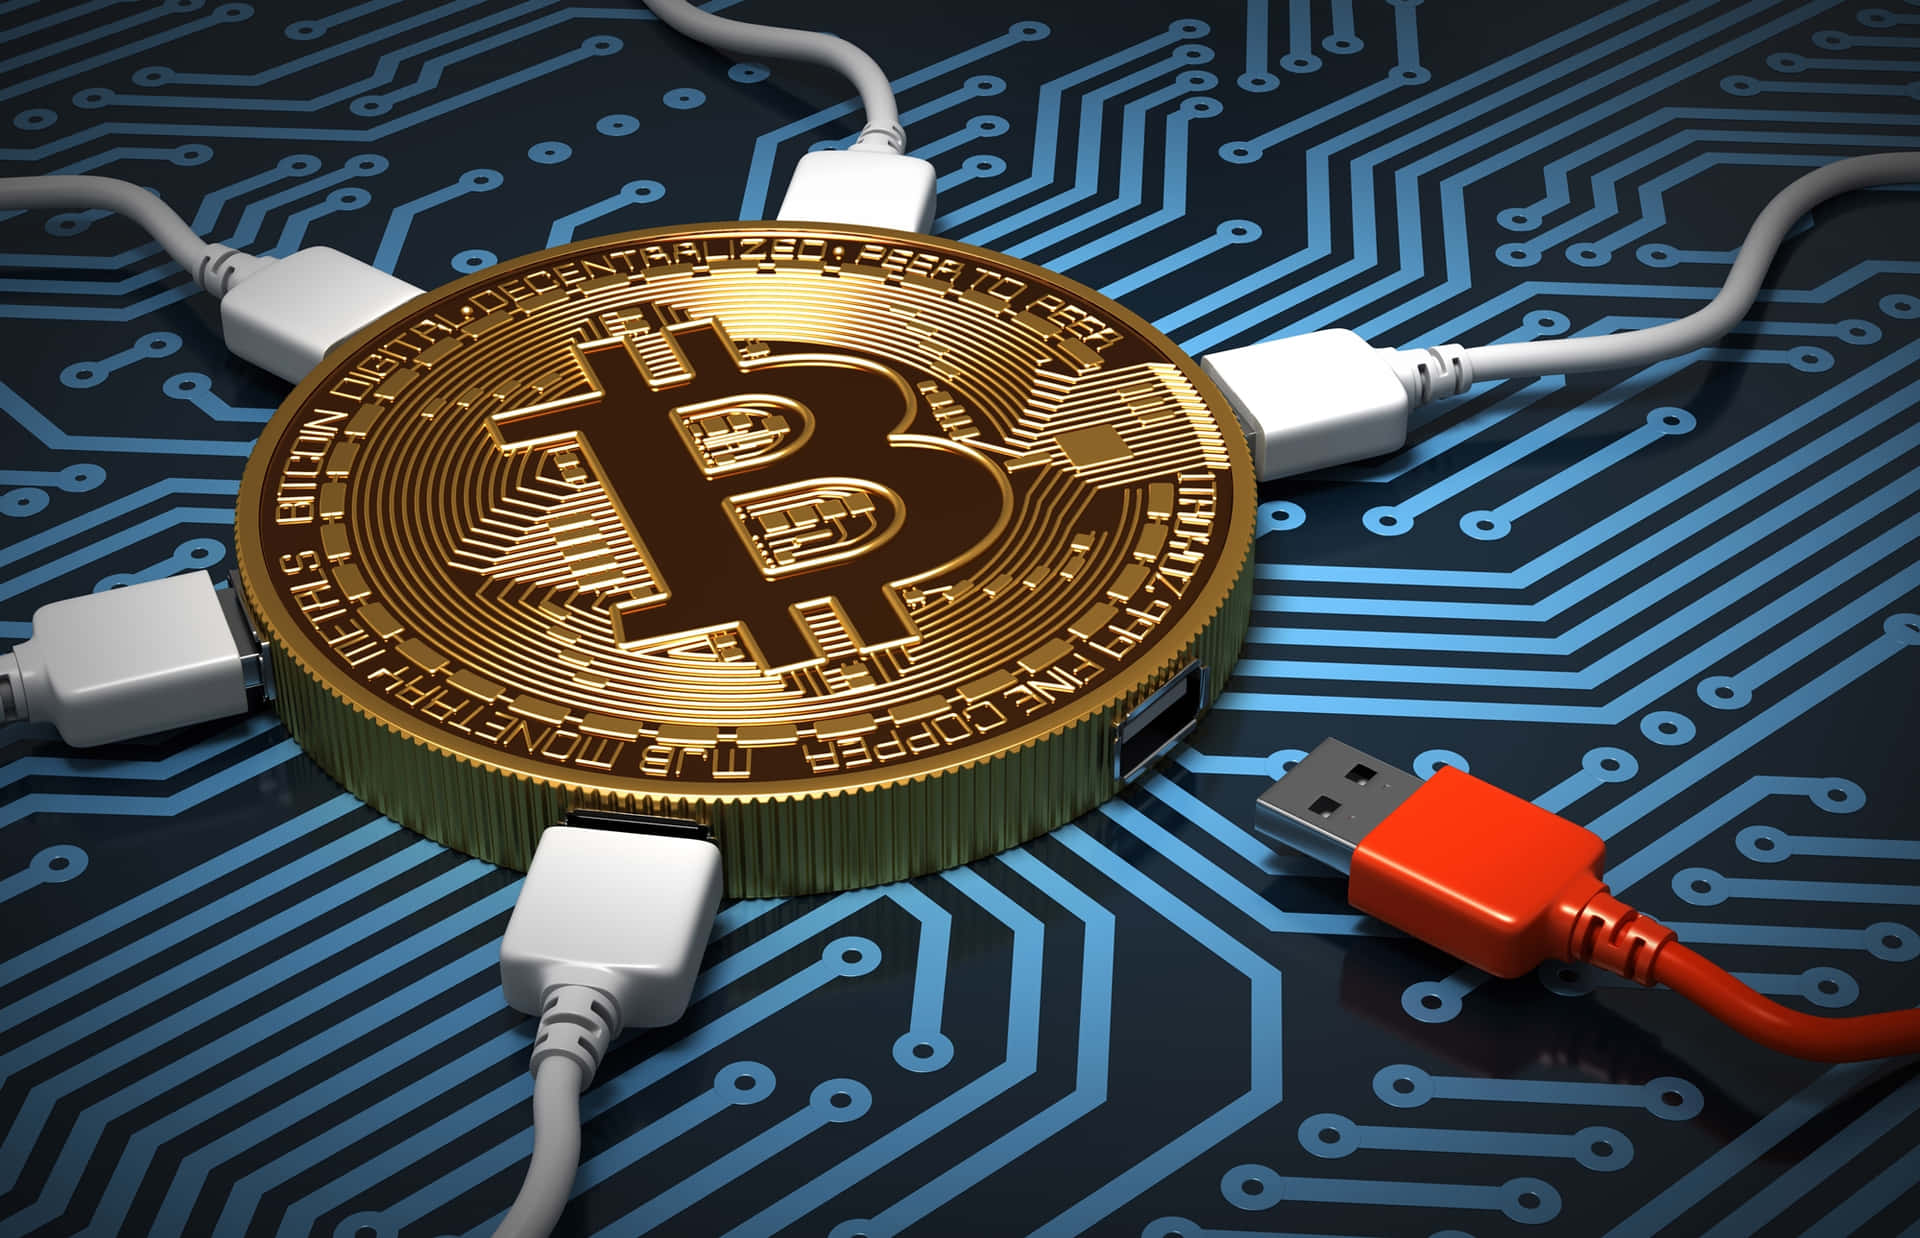 “Bitcoin - The Futuristic, Decentralized Digital Currency”